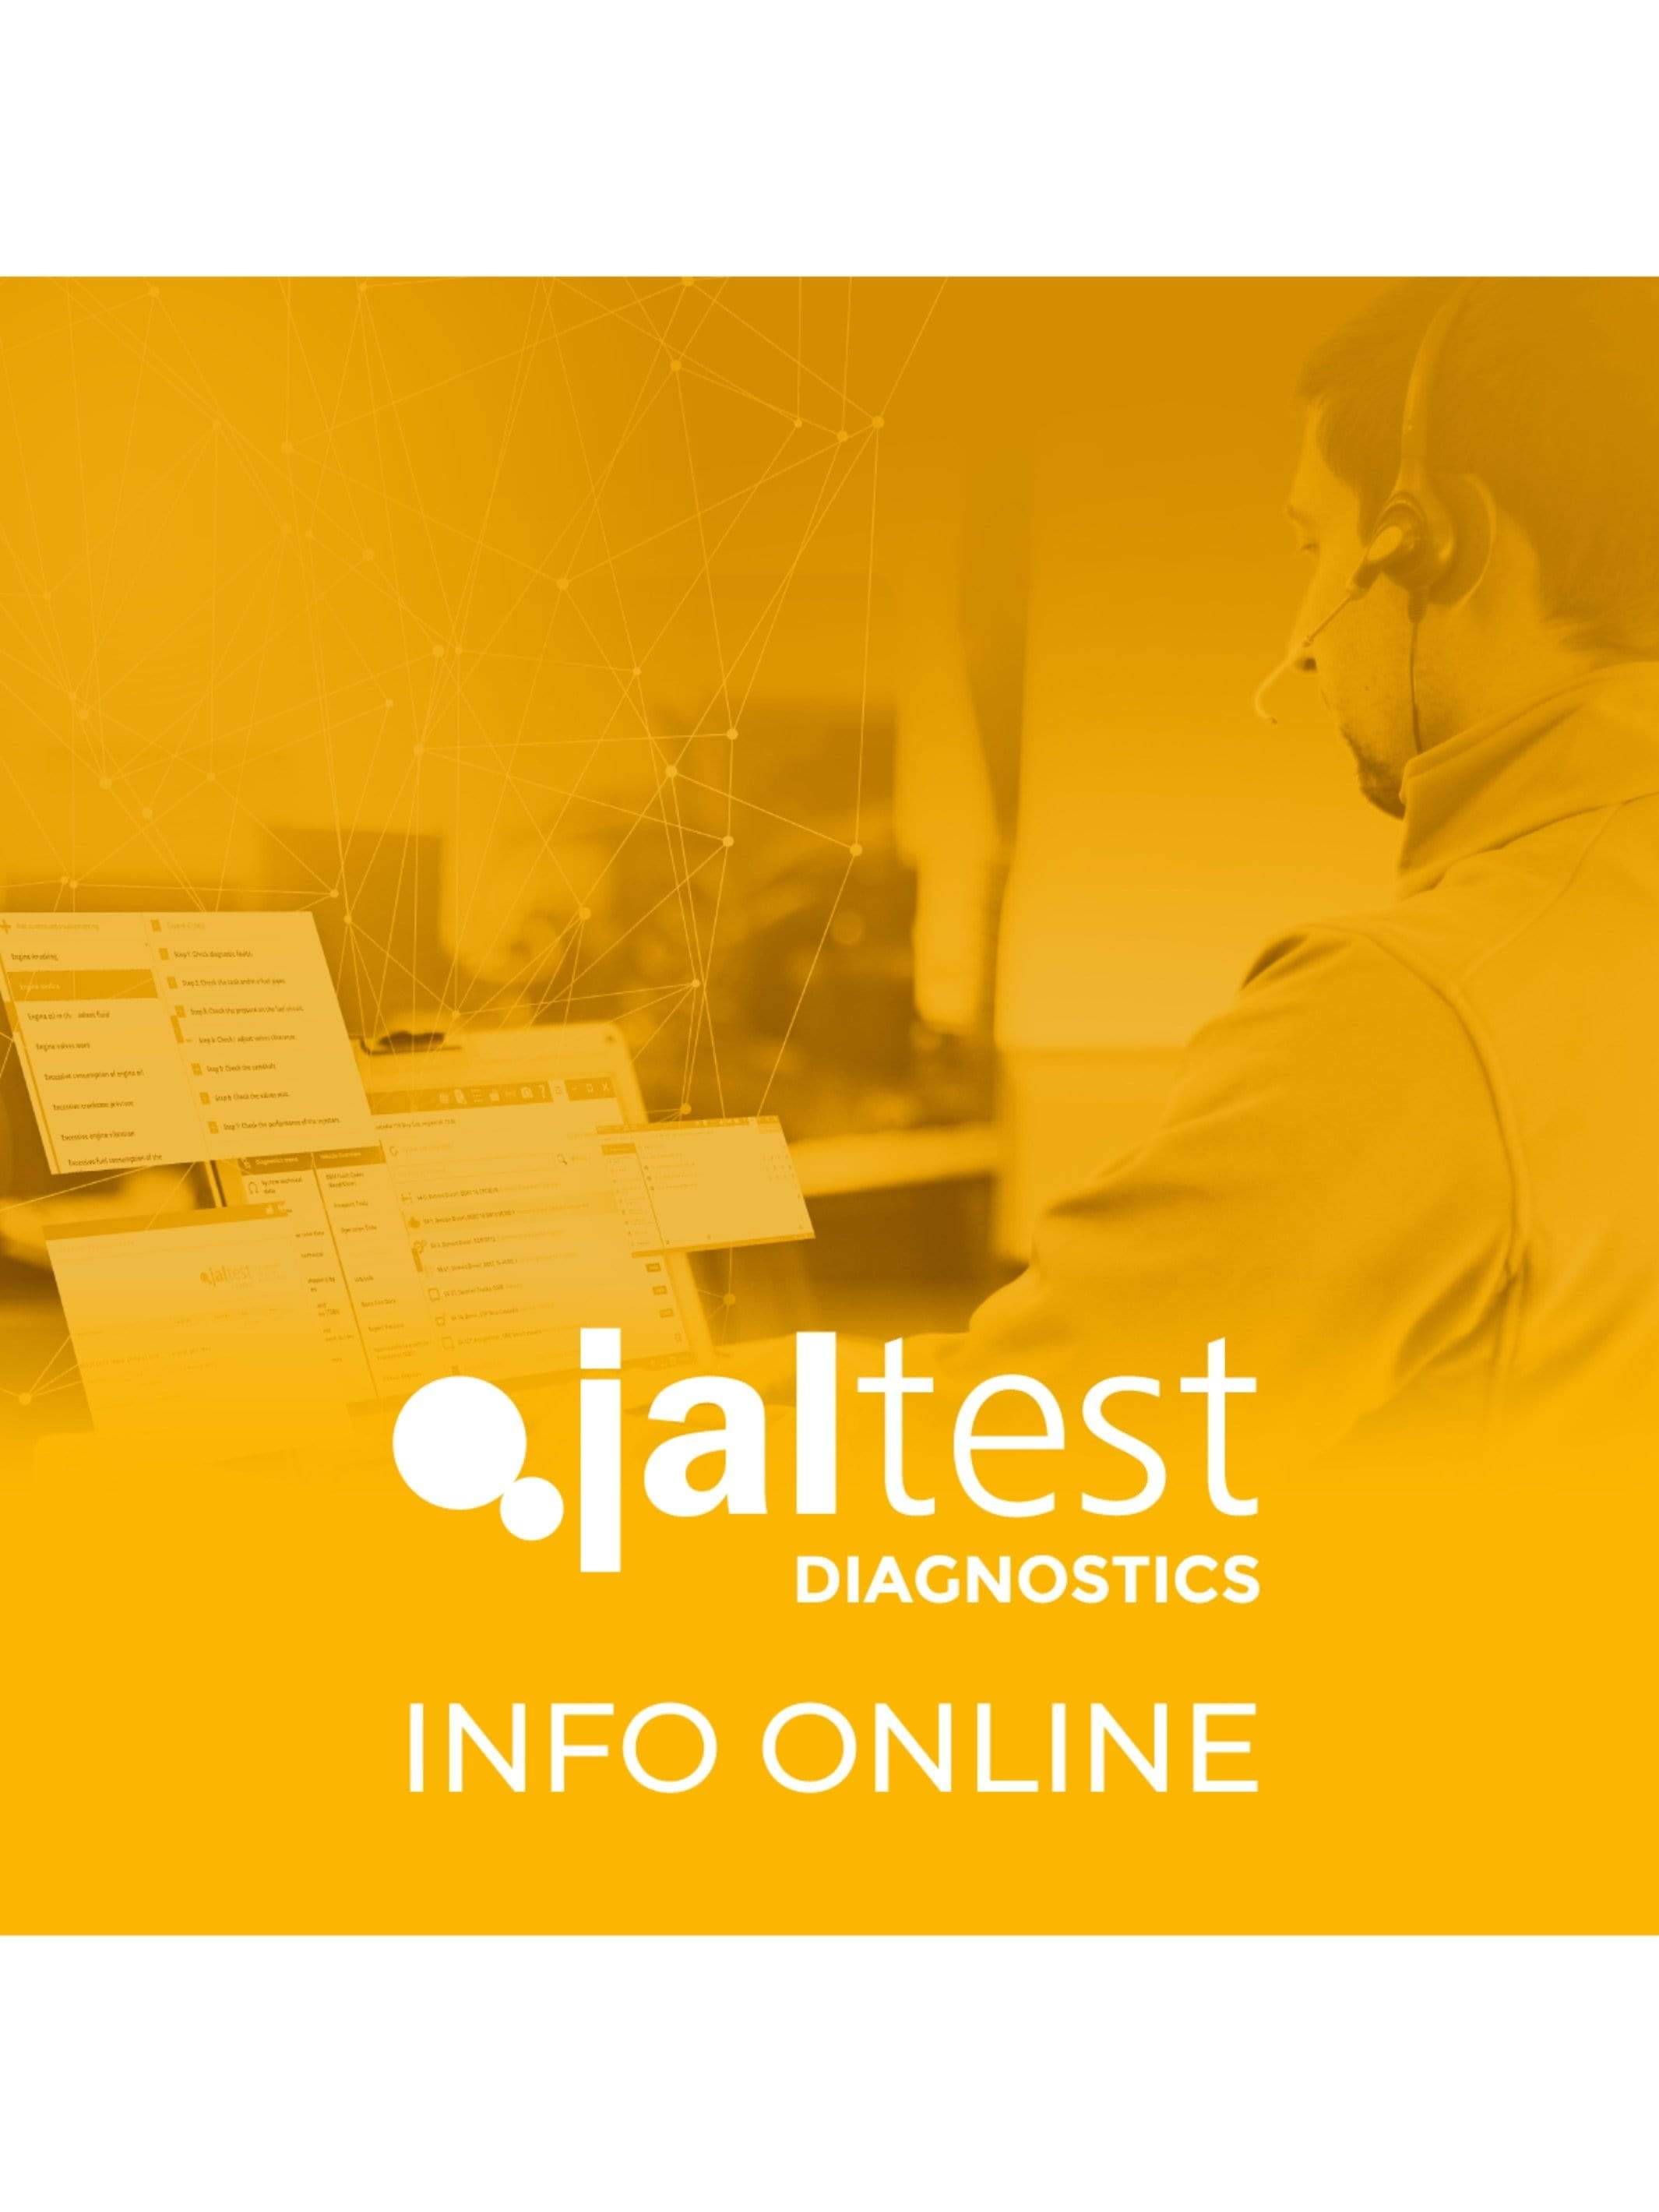 Jaltest Off Highway Diagnostics Info - Jaltest Commercial Vehicle, Construction & Heavy Equipment Diagnostic Tool